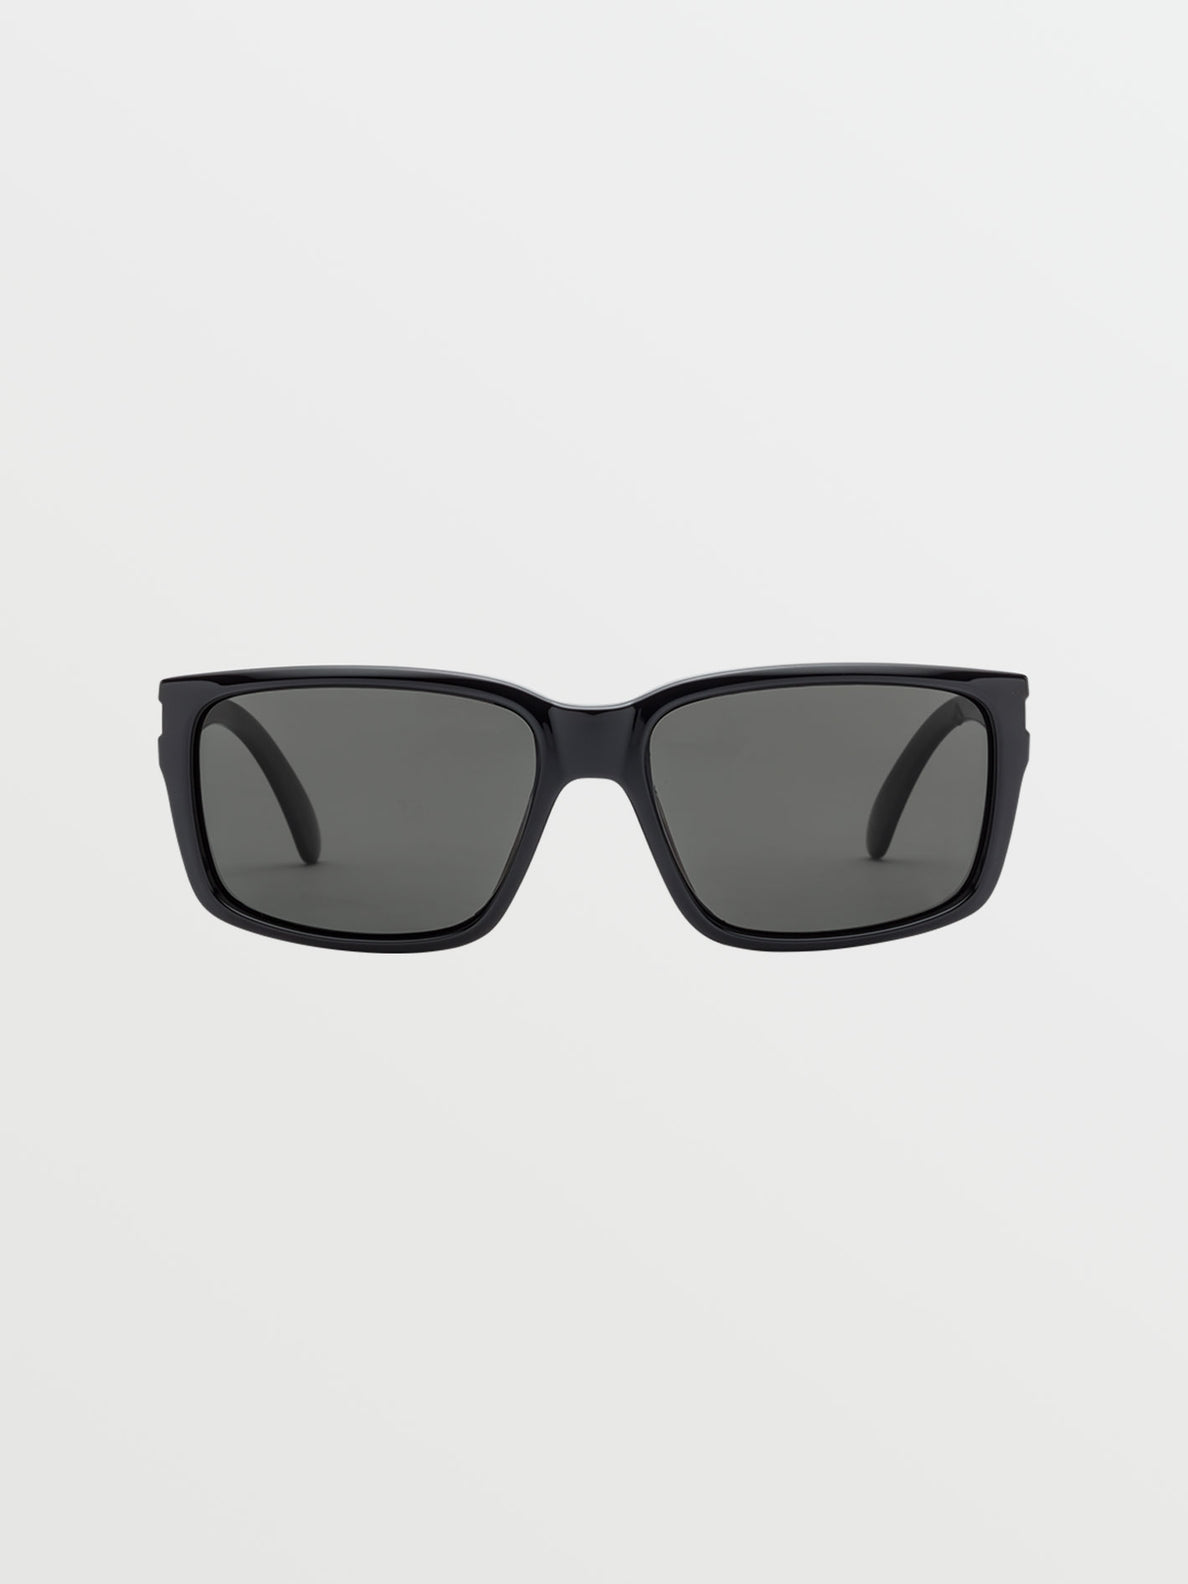 Stoneage Sunglasses - Gloss Black/Gray